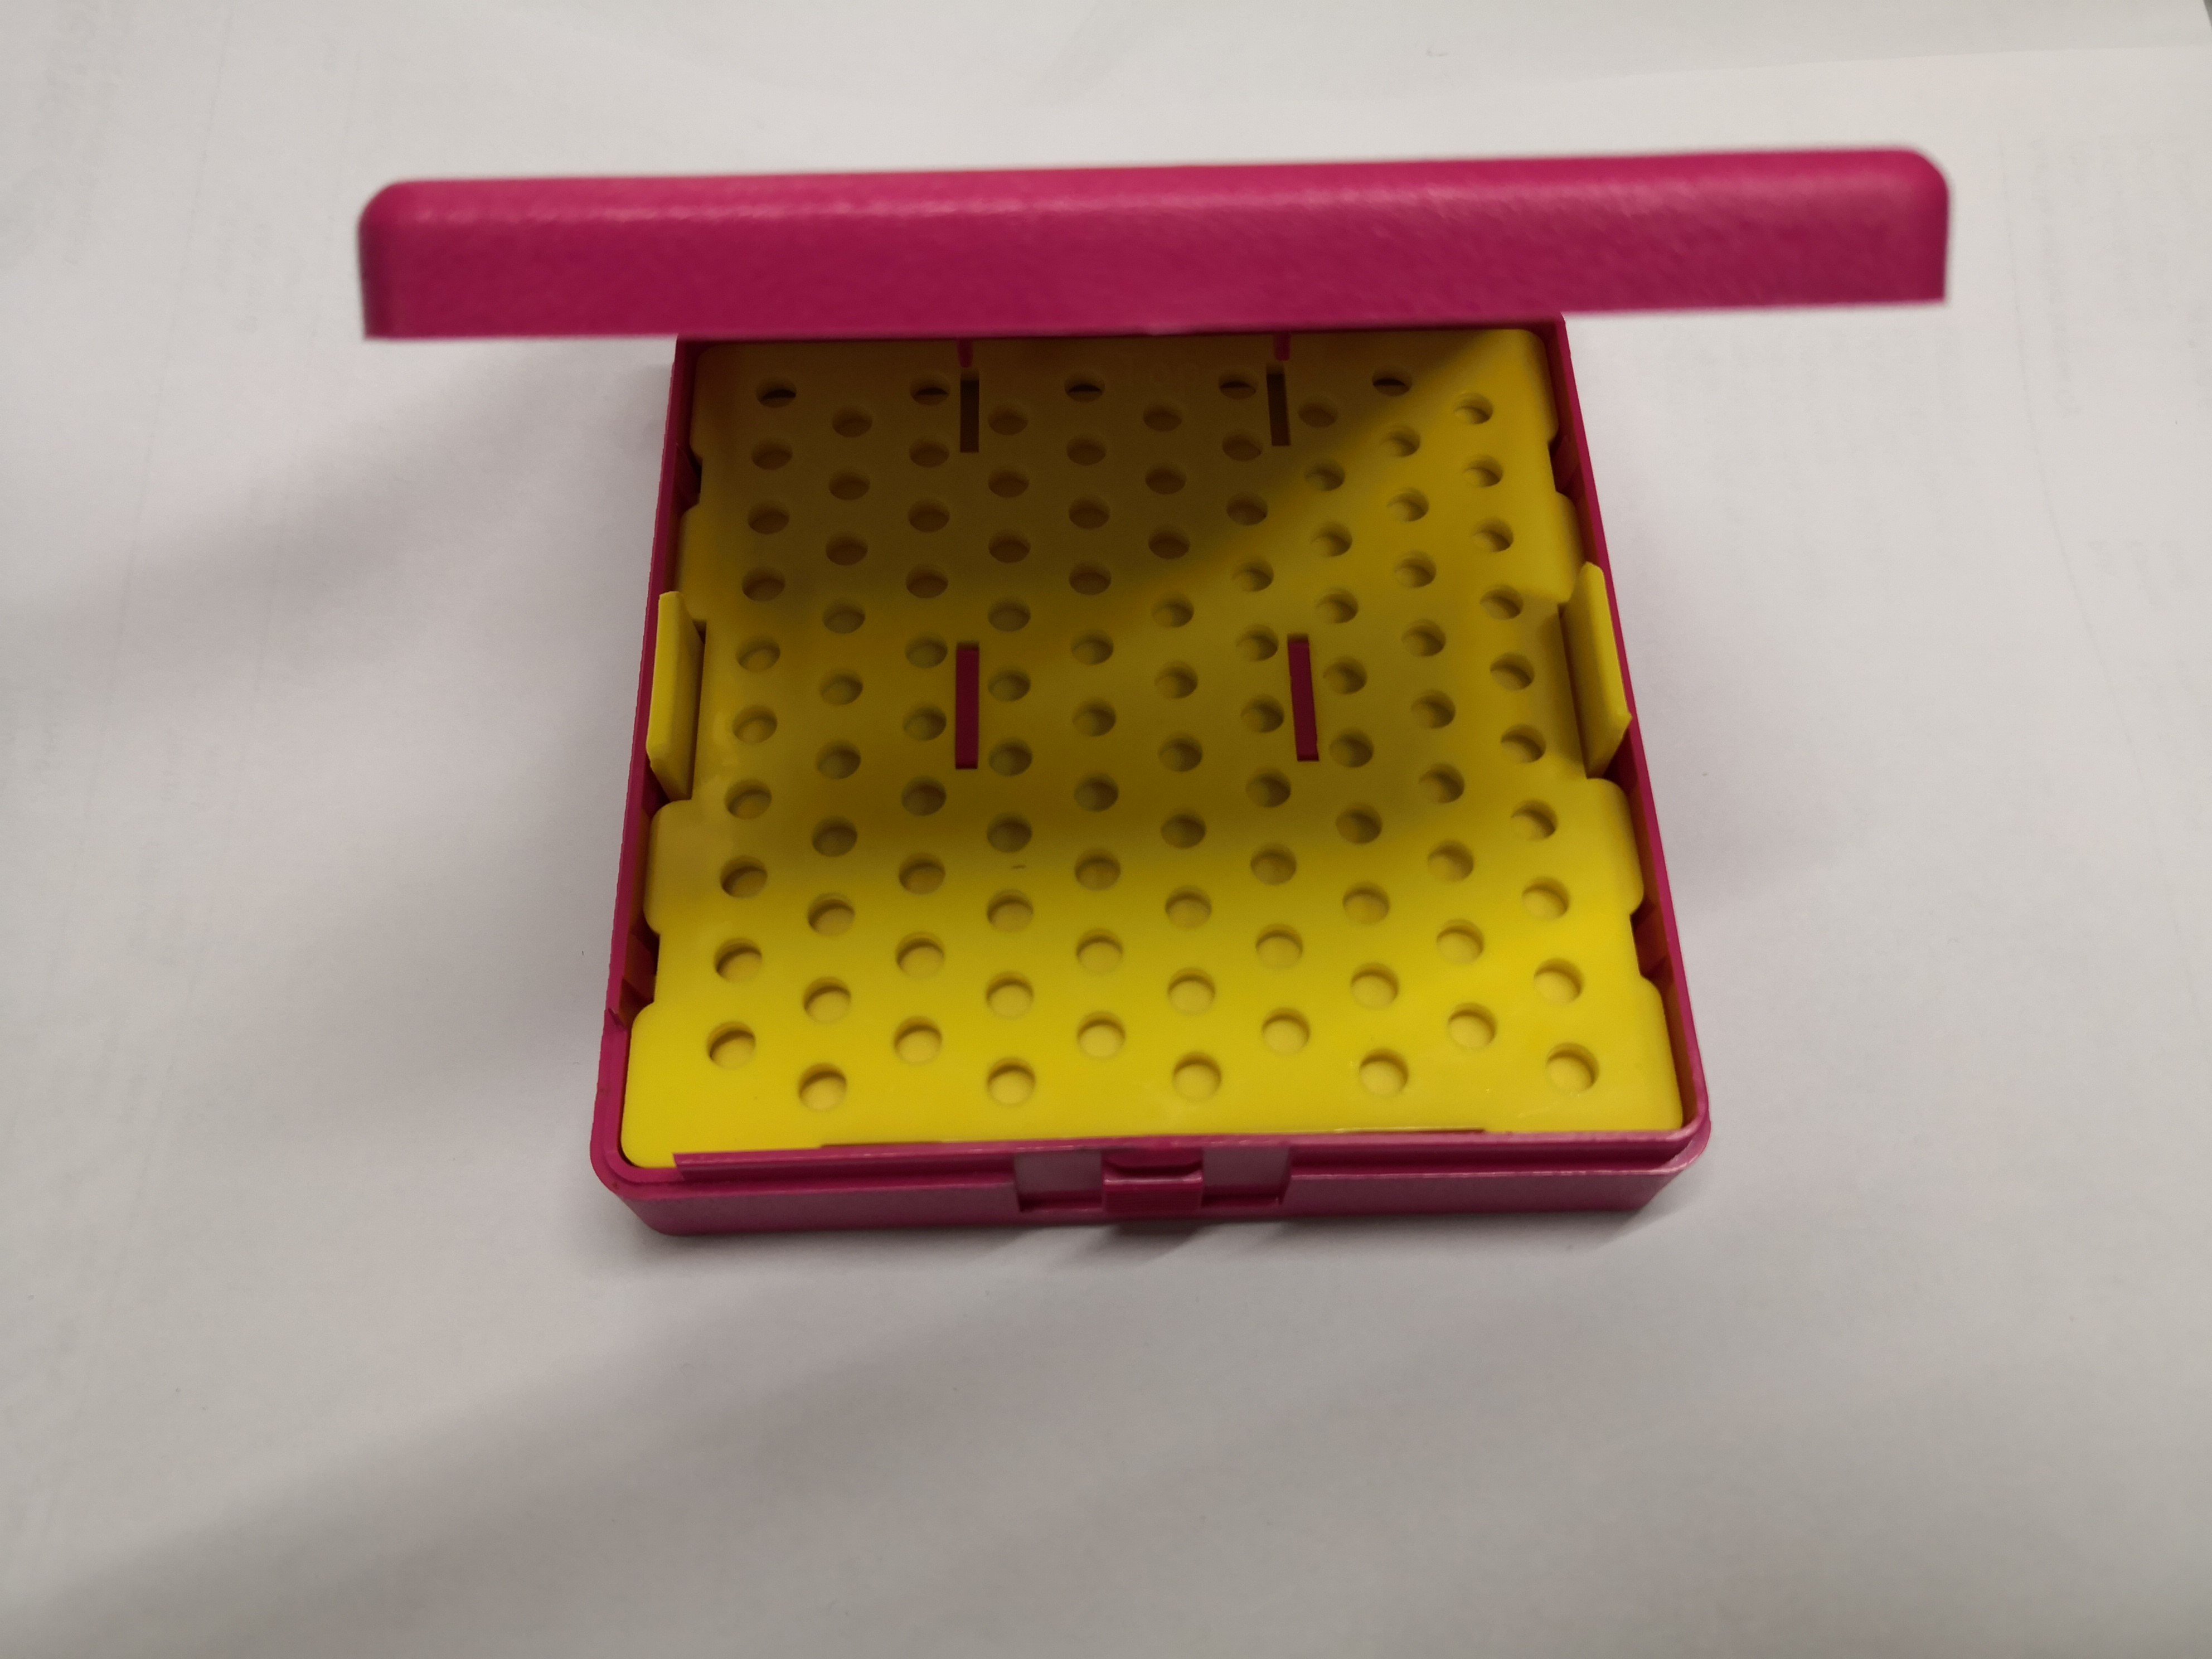 H&N Match Box ilmakiväärin luodeille väri pinkki